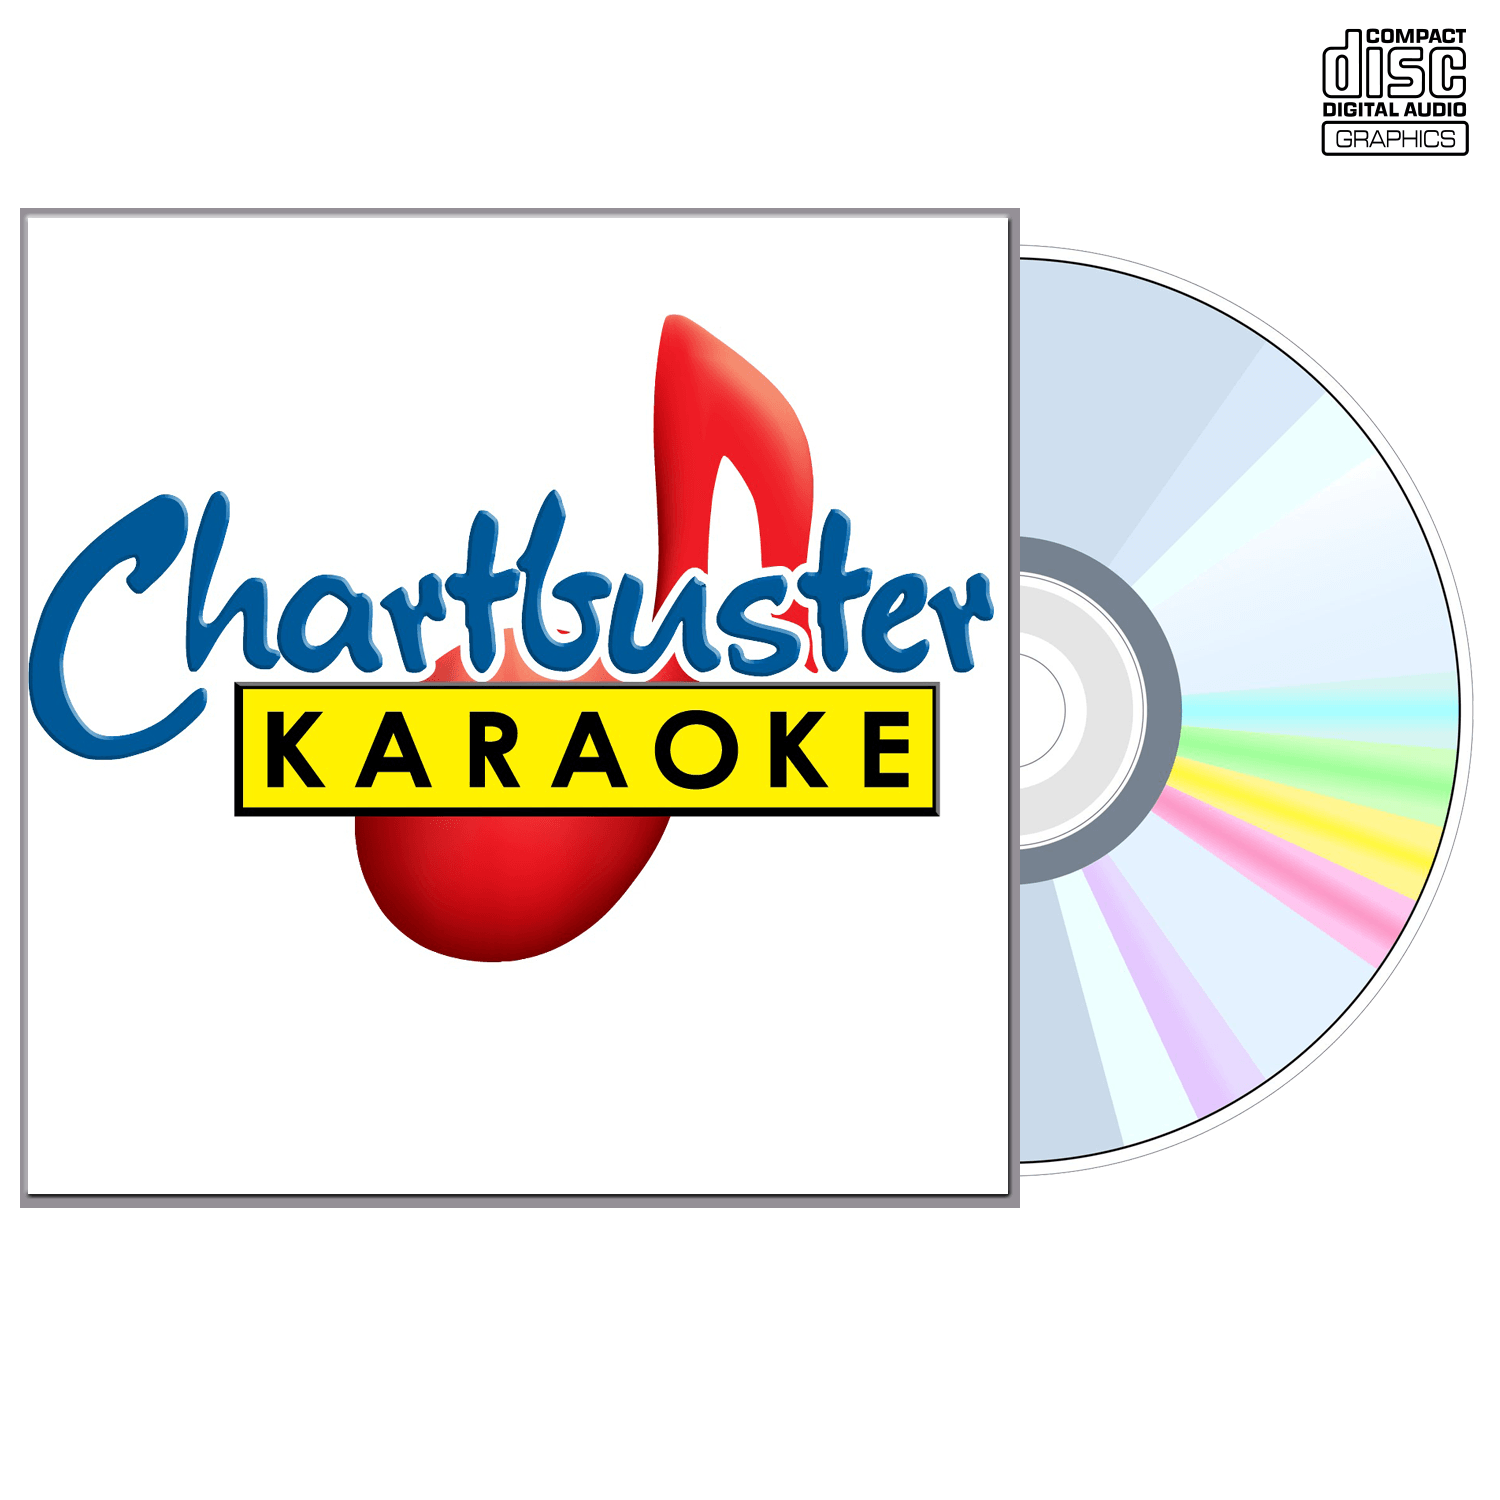 Whitney Houston Vol 1 - CD+G - Chartbuster Karaoke - Karaoke Home Entertainment